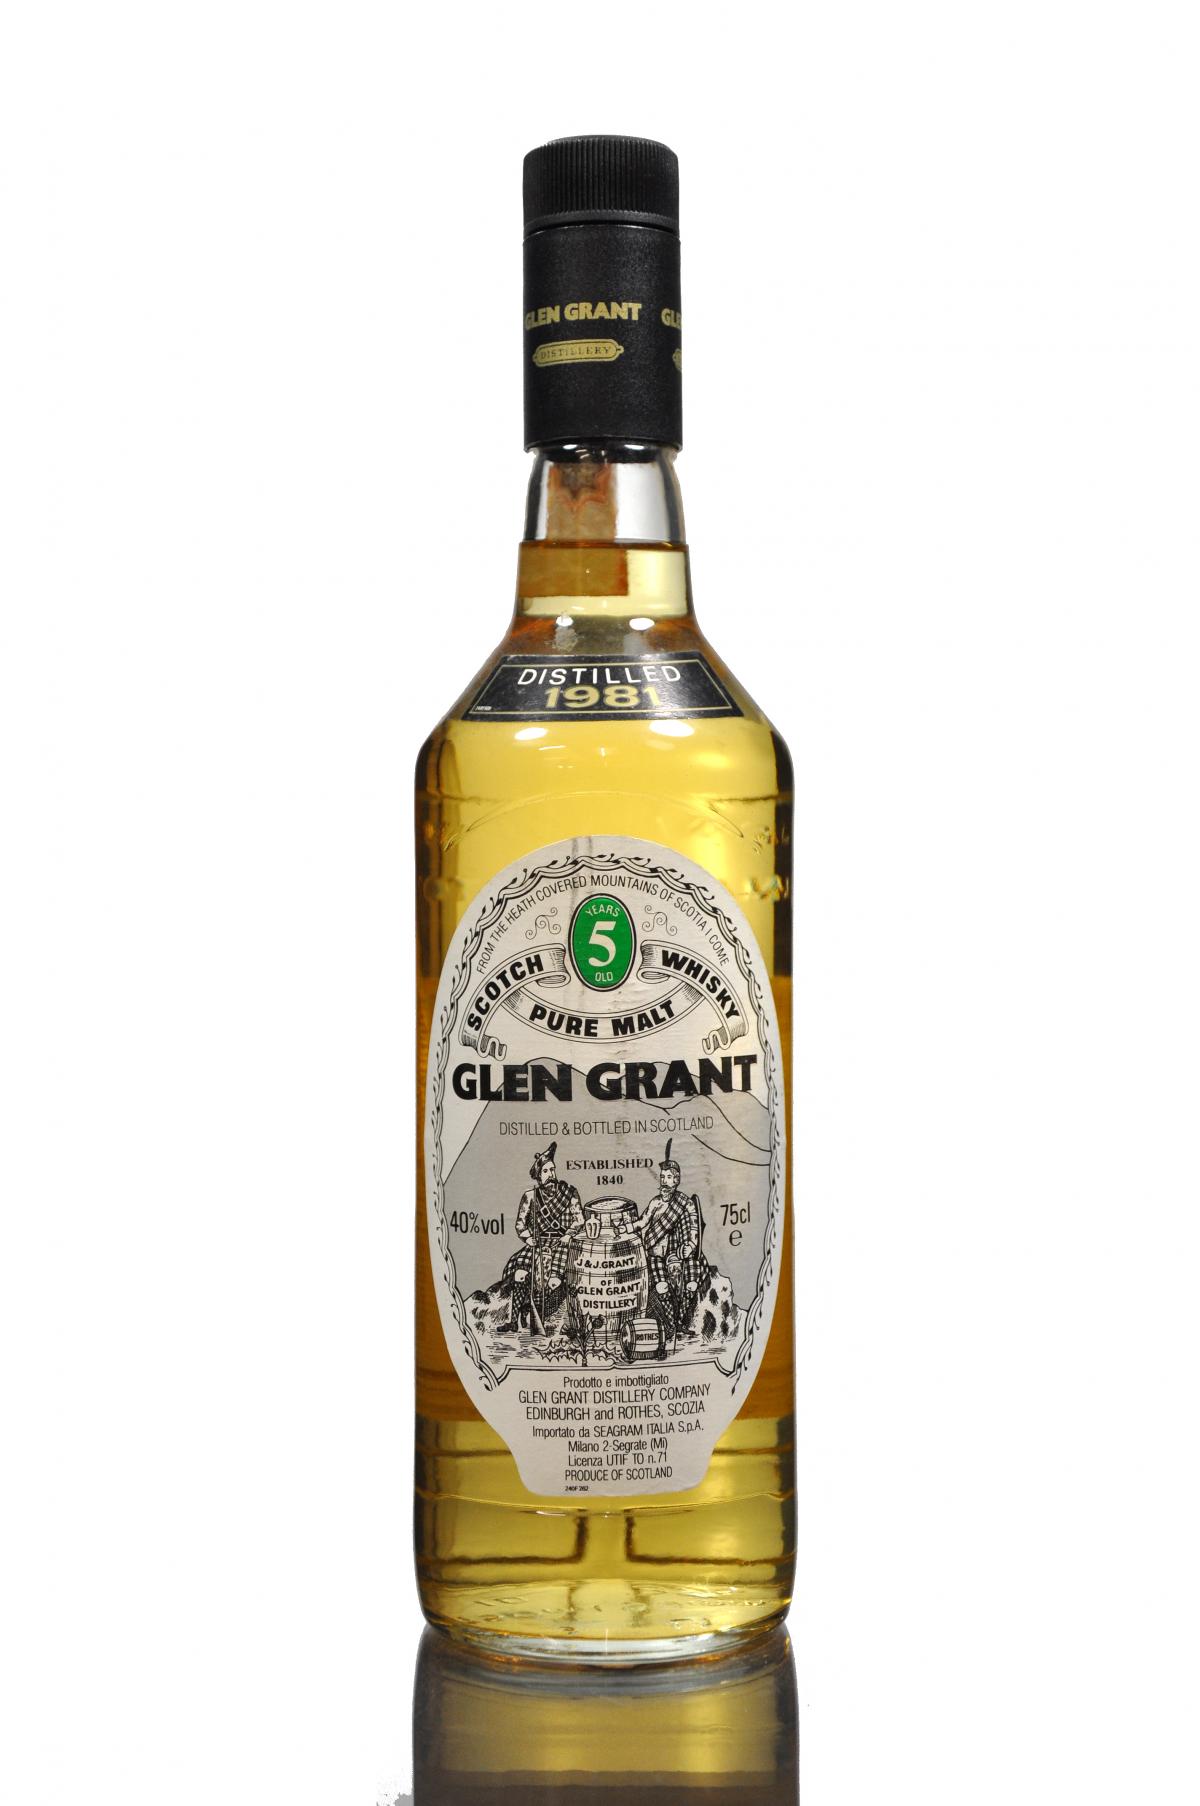 Glen Grant 1981- 5 Year Old - Italian Market